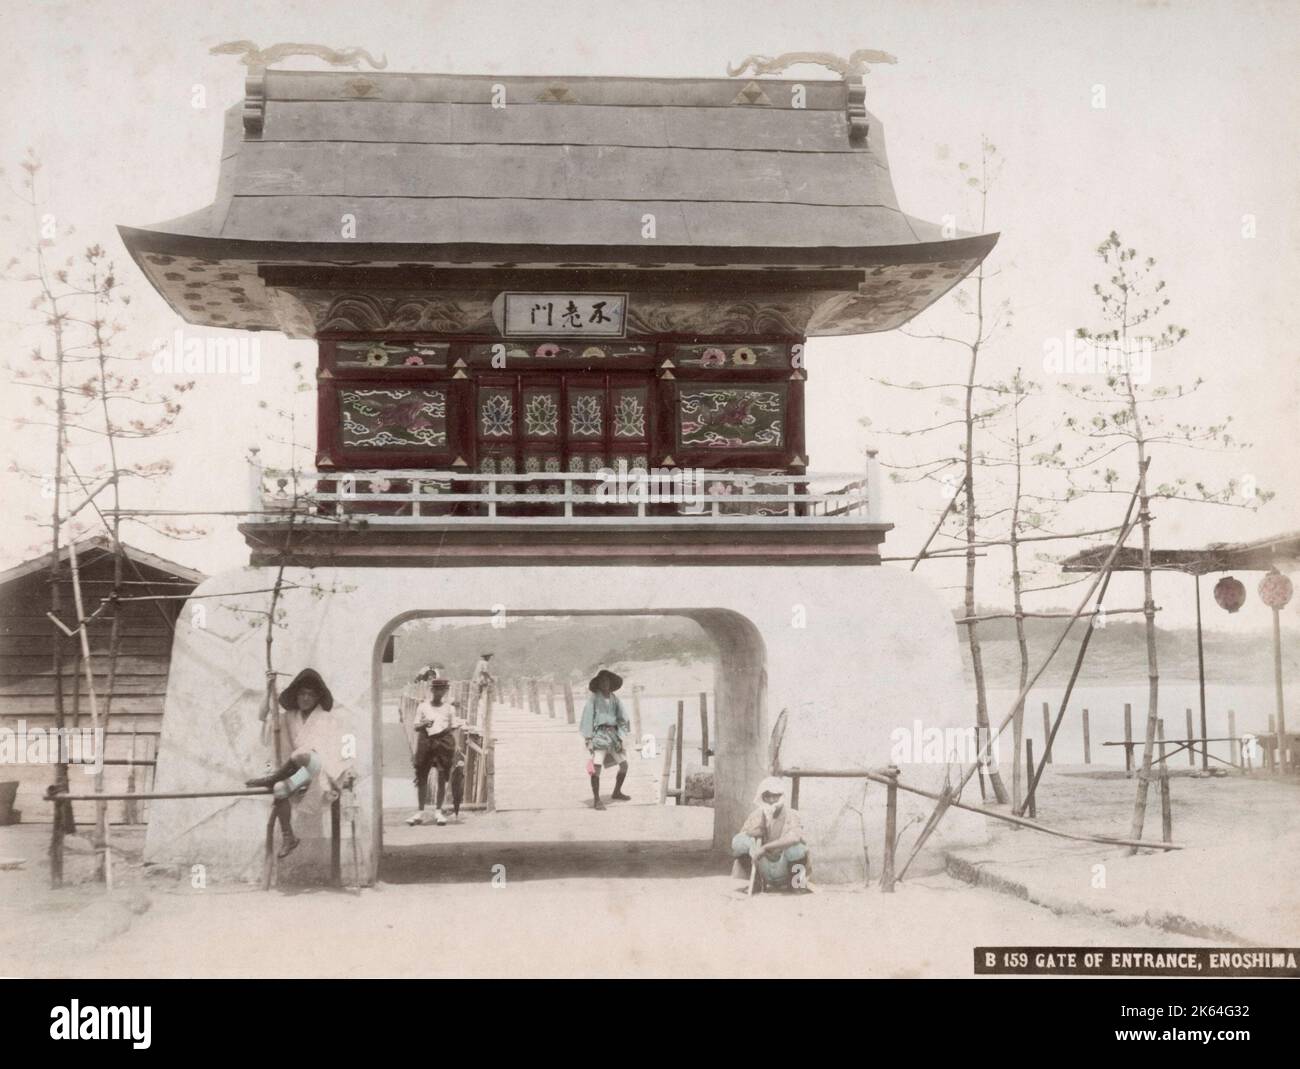 Ende des 19th. Jahrhunderts Foto: Eingangstor auf dem Weg nach Enoshima, Japan. Stockfoto